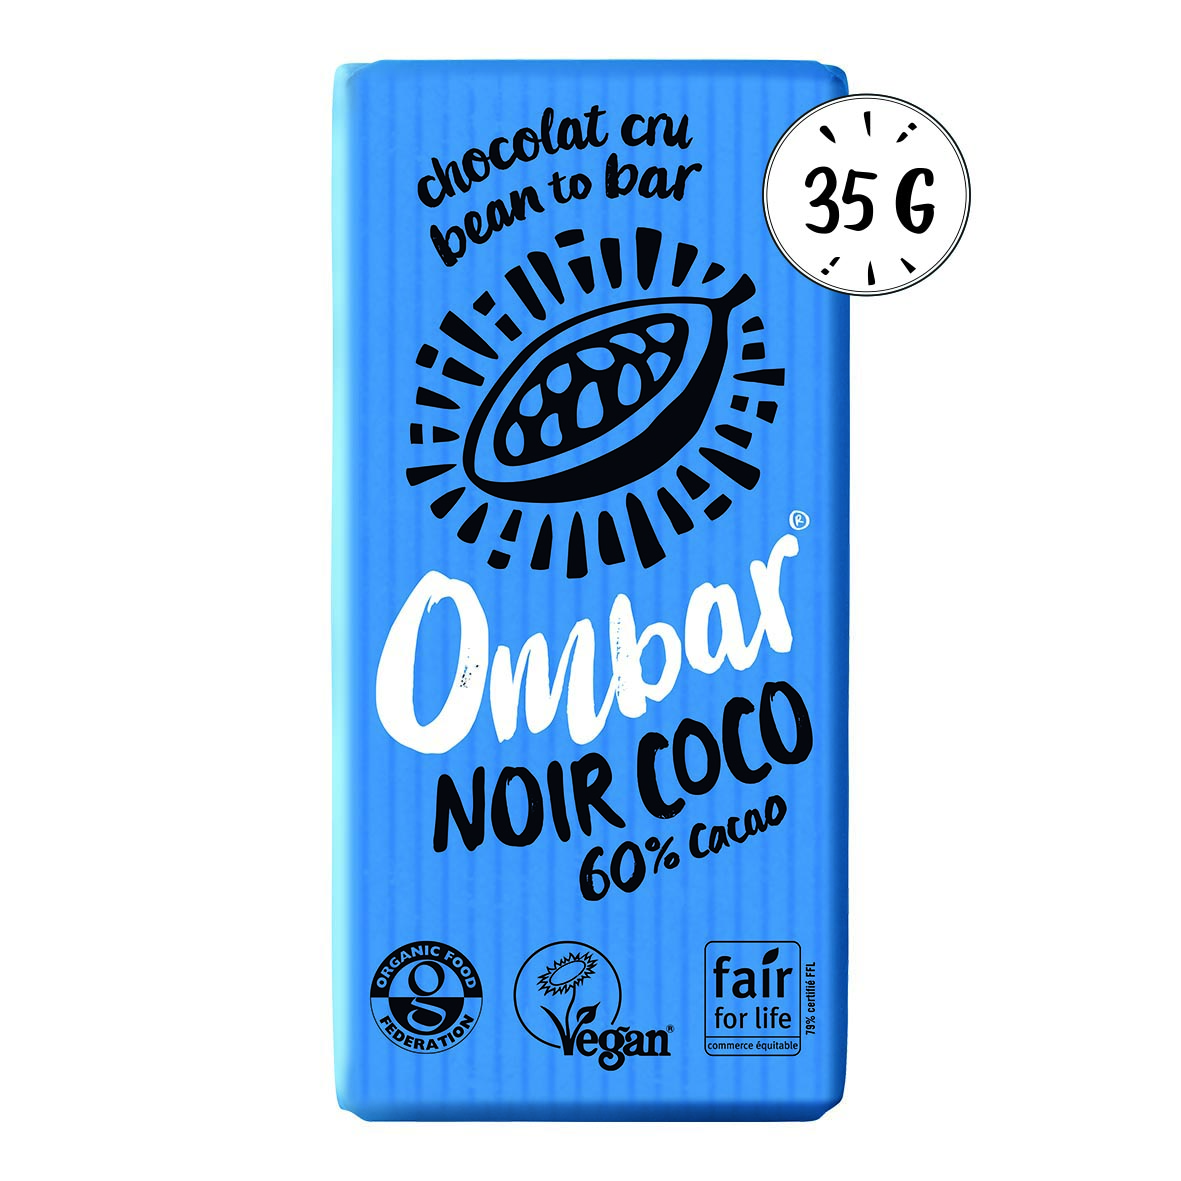 Chocolat CRU noir coco 35g